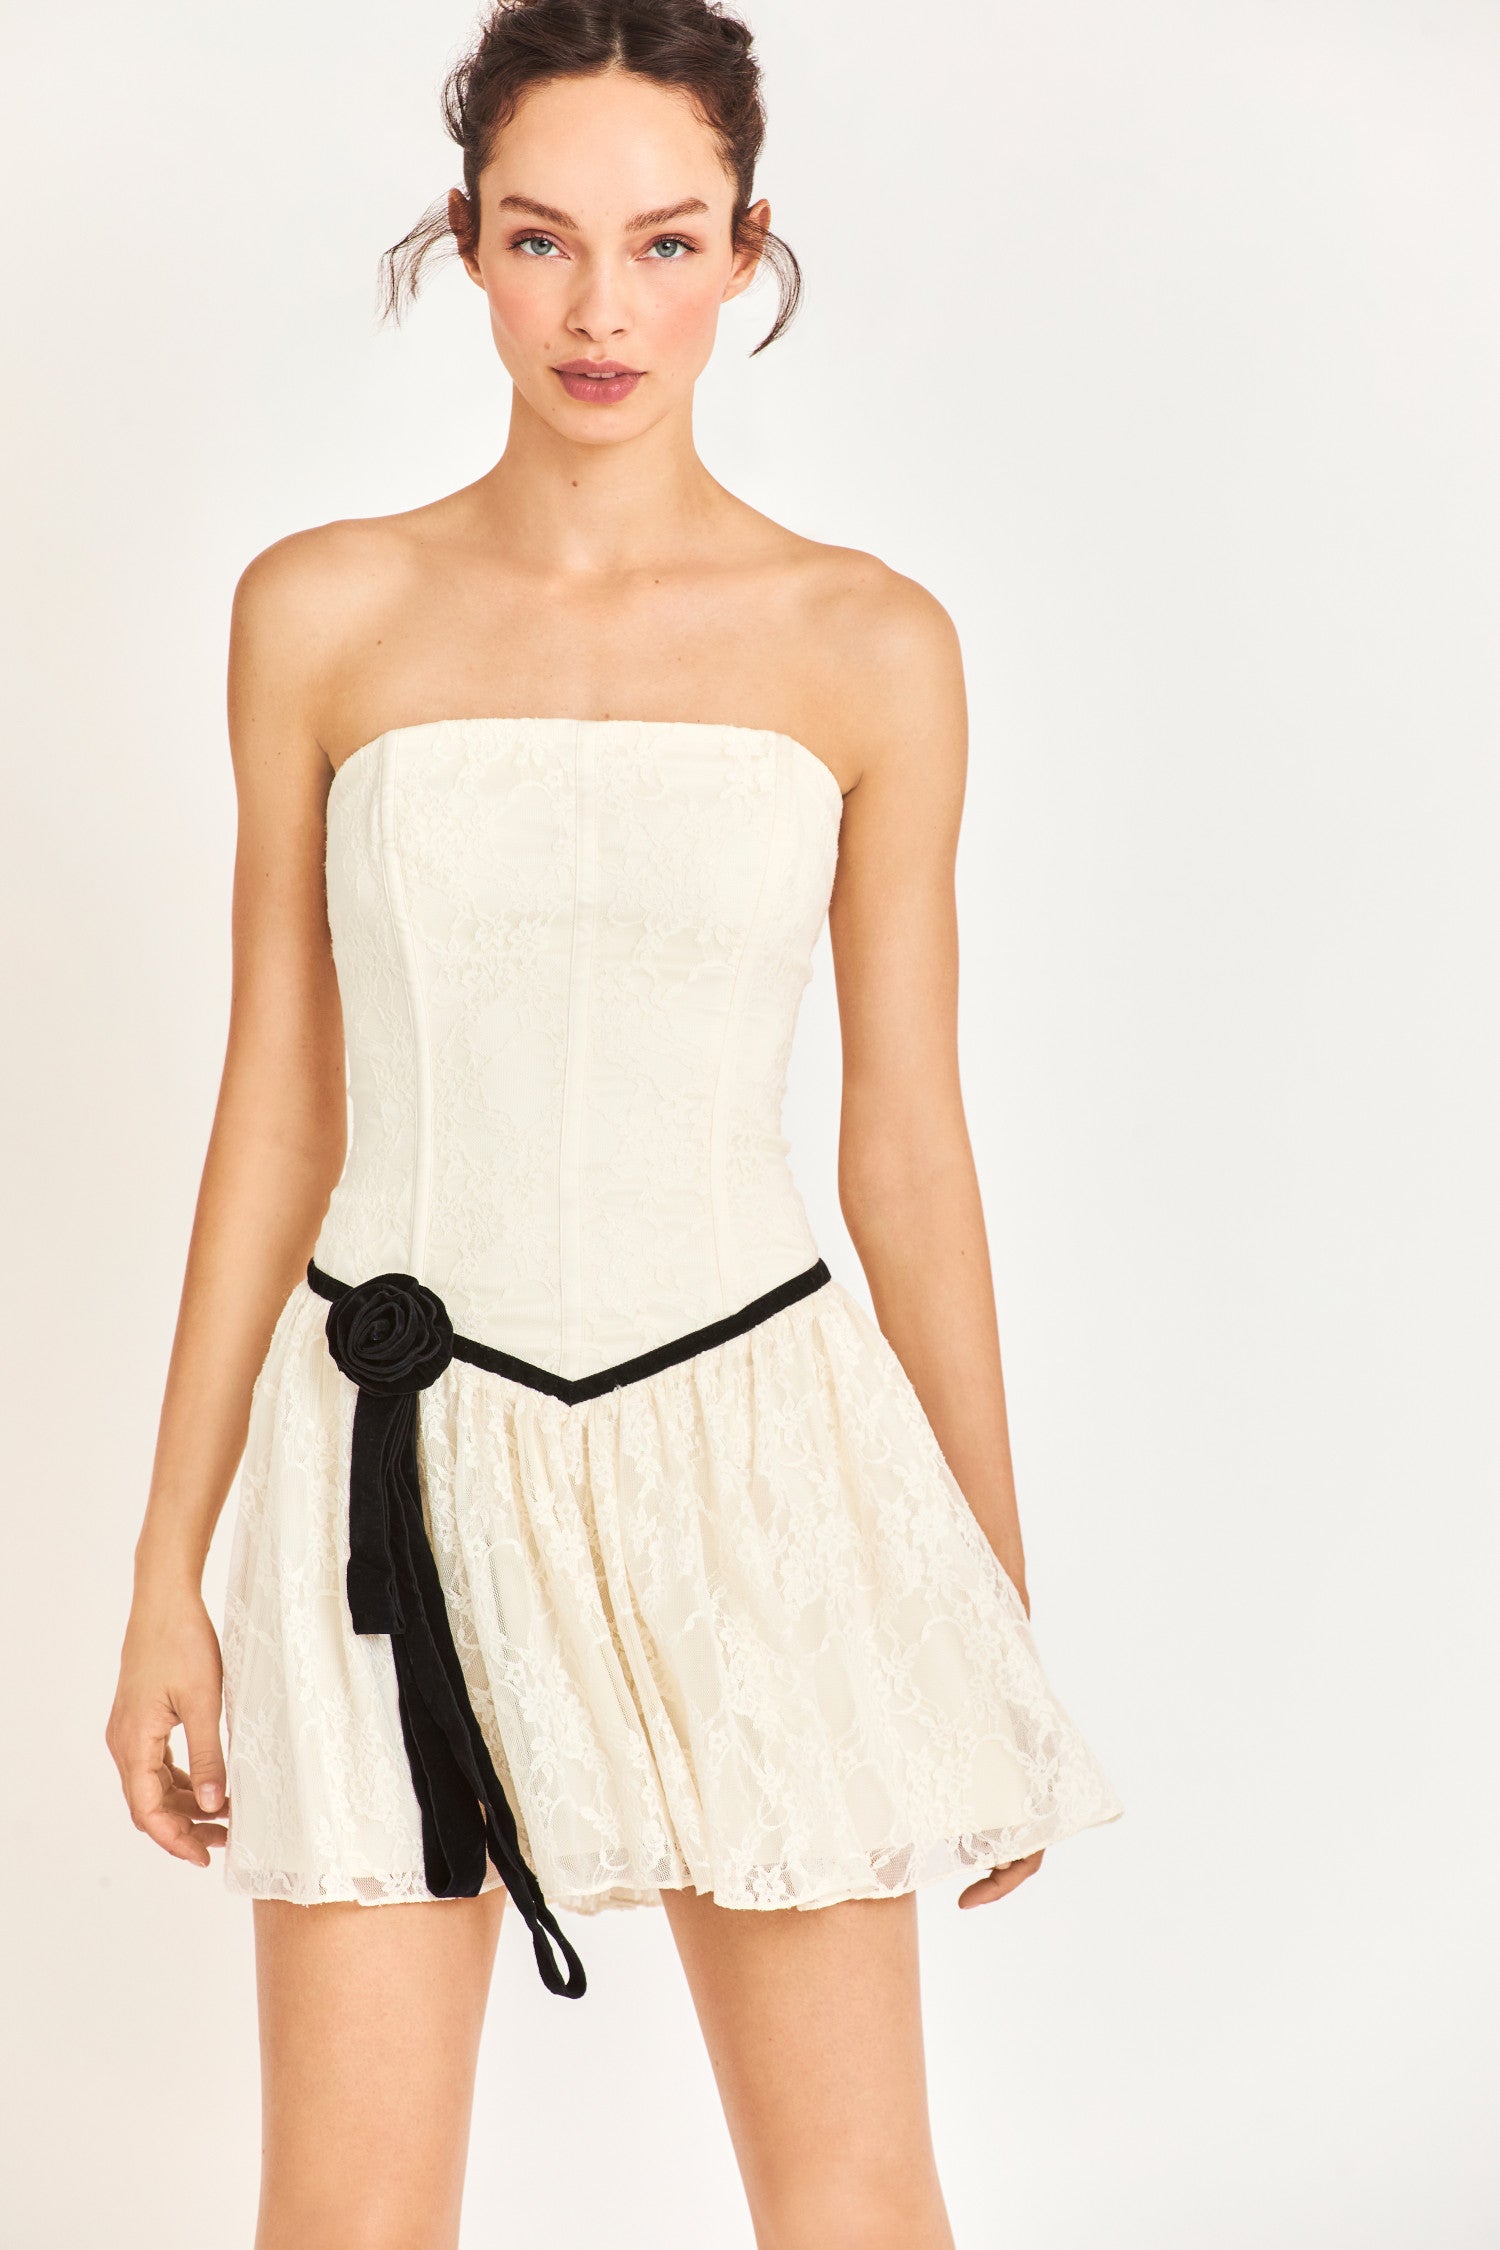 Model wearing white mini dress with black flower detail